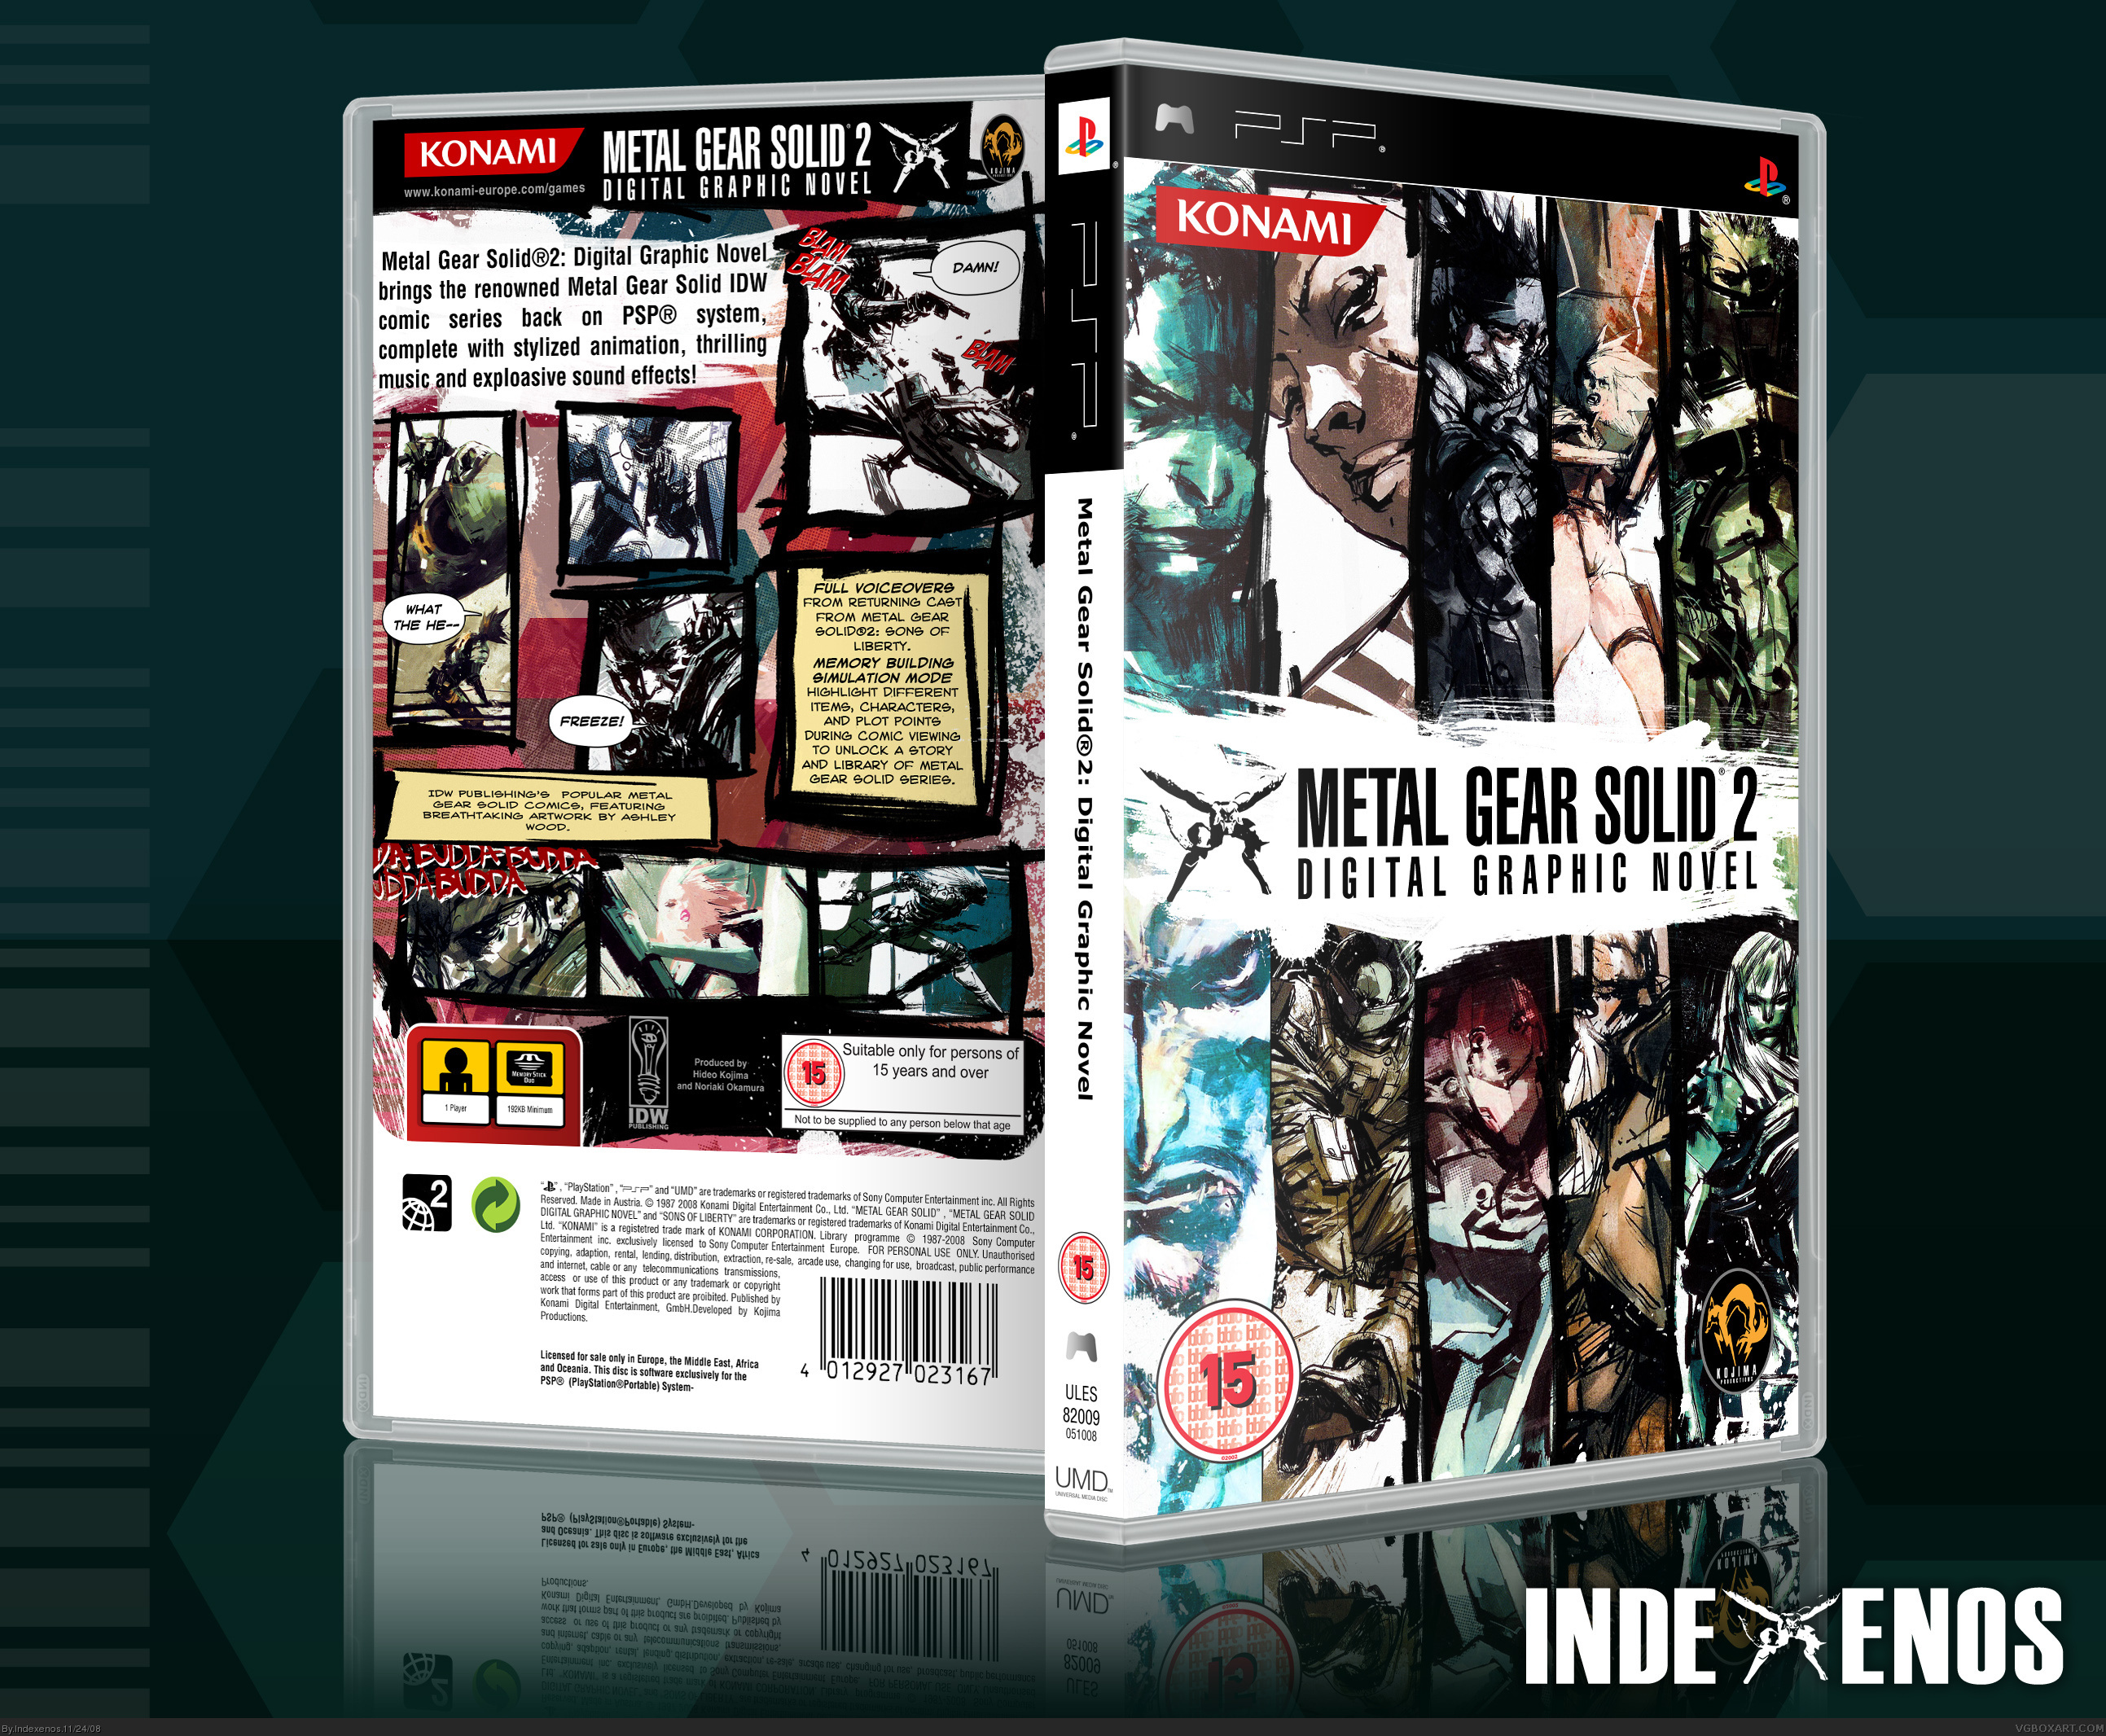 Metal Gear Solid 2: Digital Graphic Novel box cover